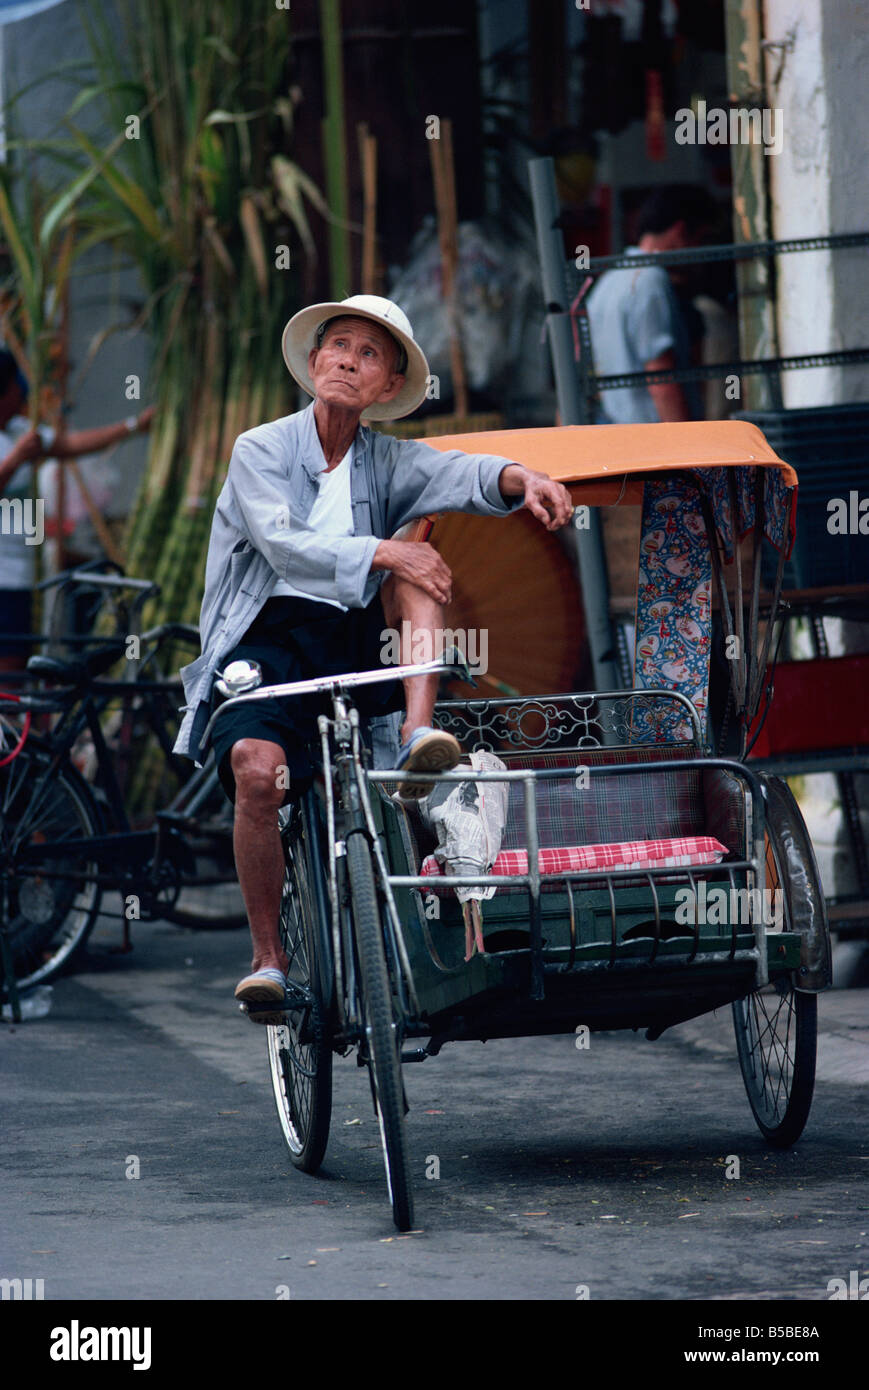 Ciclo taxi rider descansando, Singapur, Sudeste de Asia Foto de stock